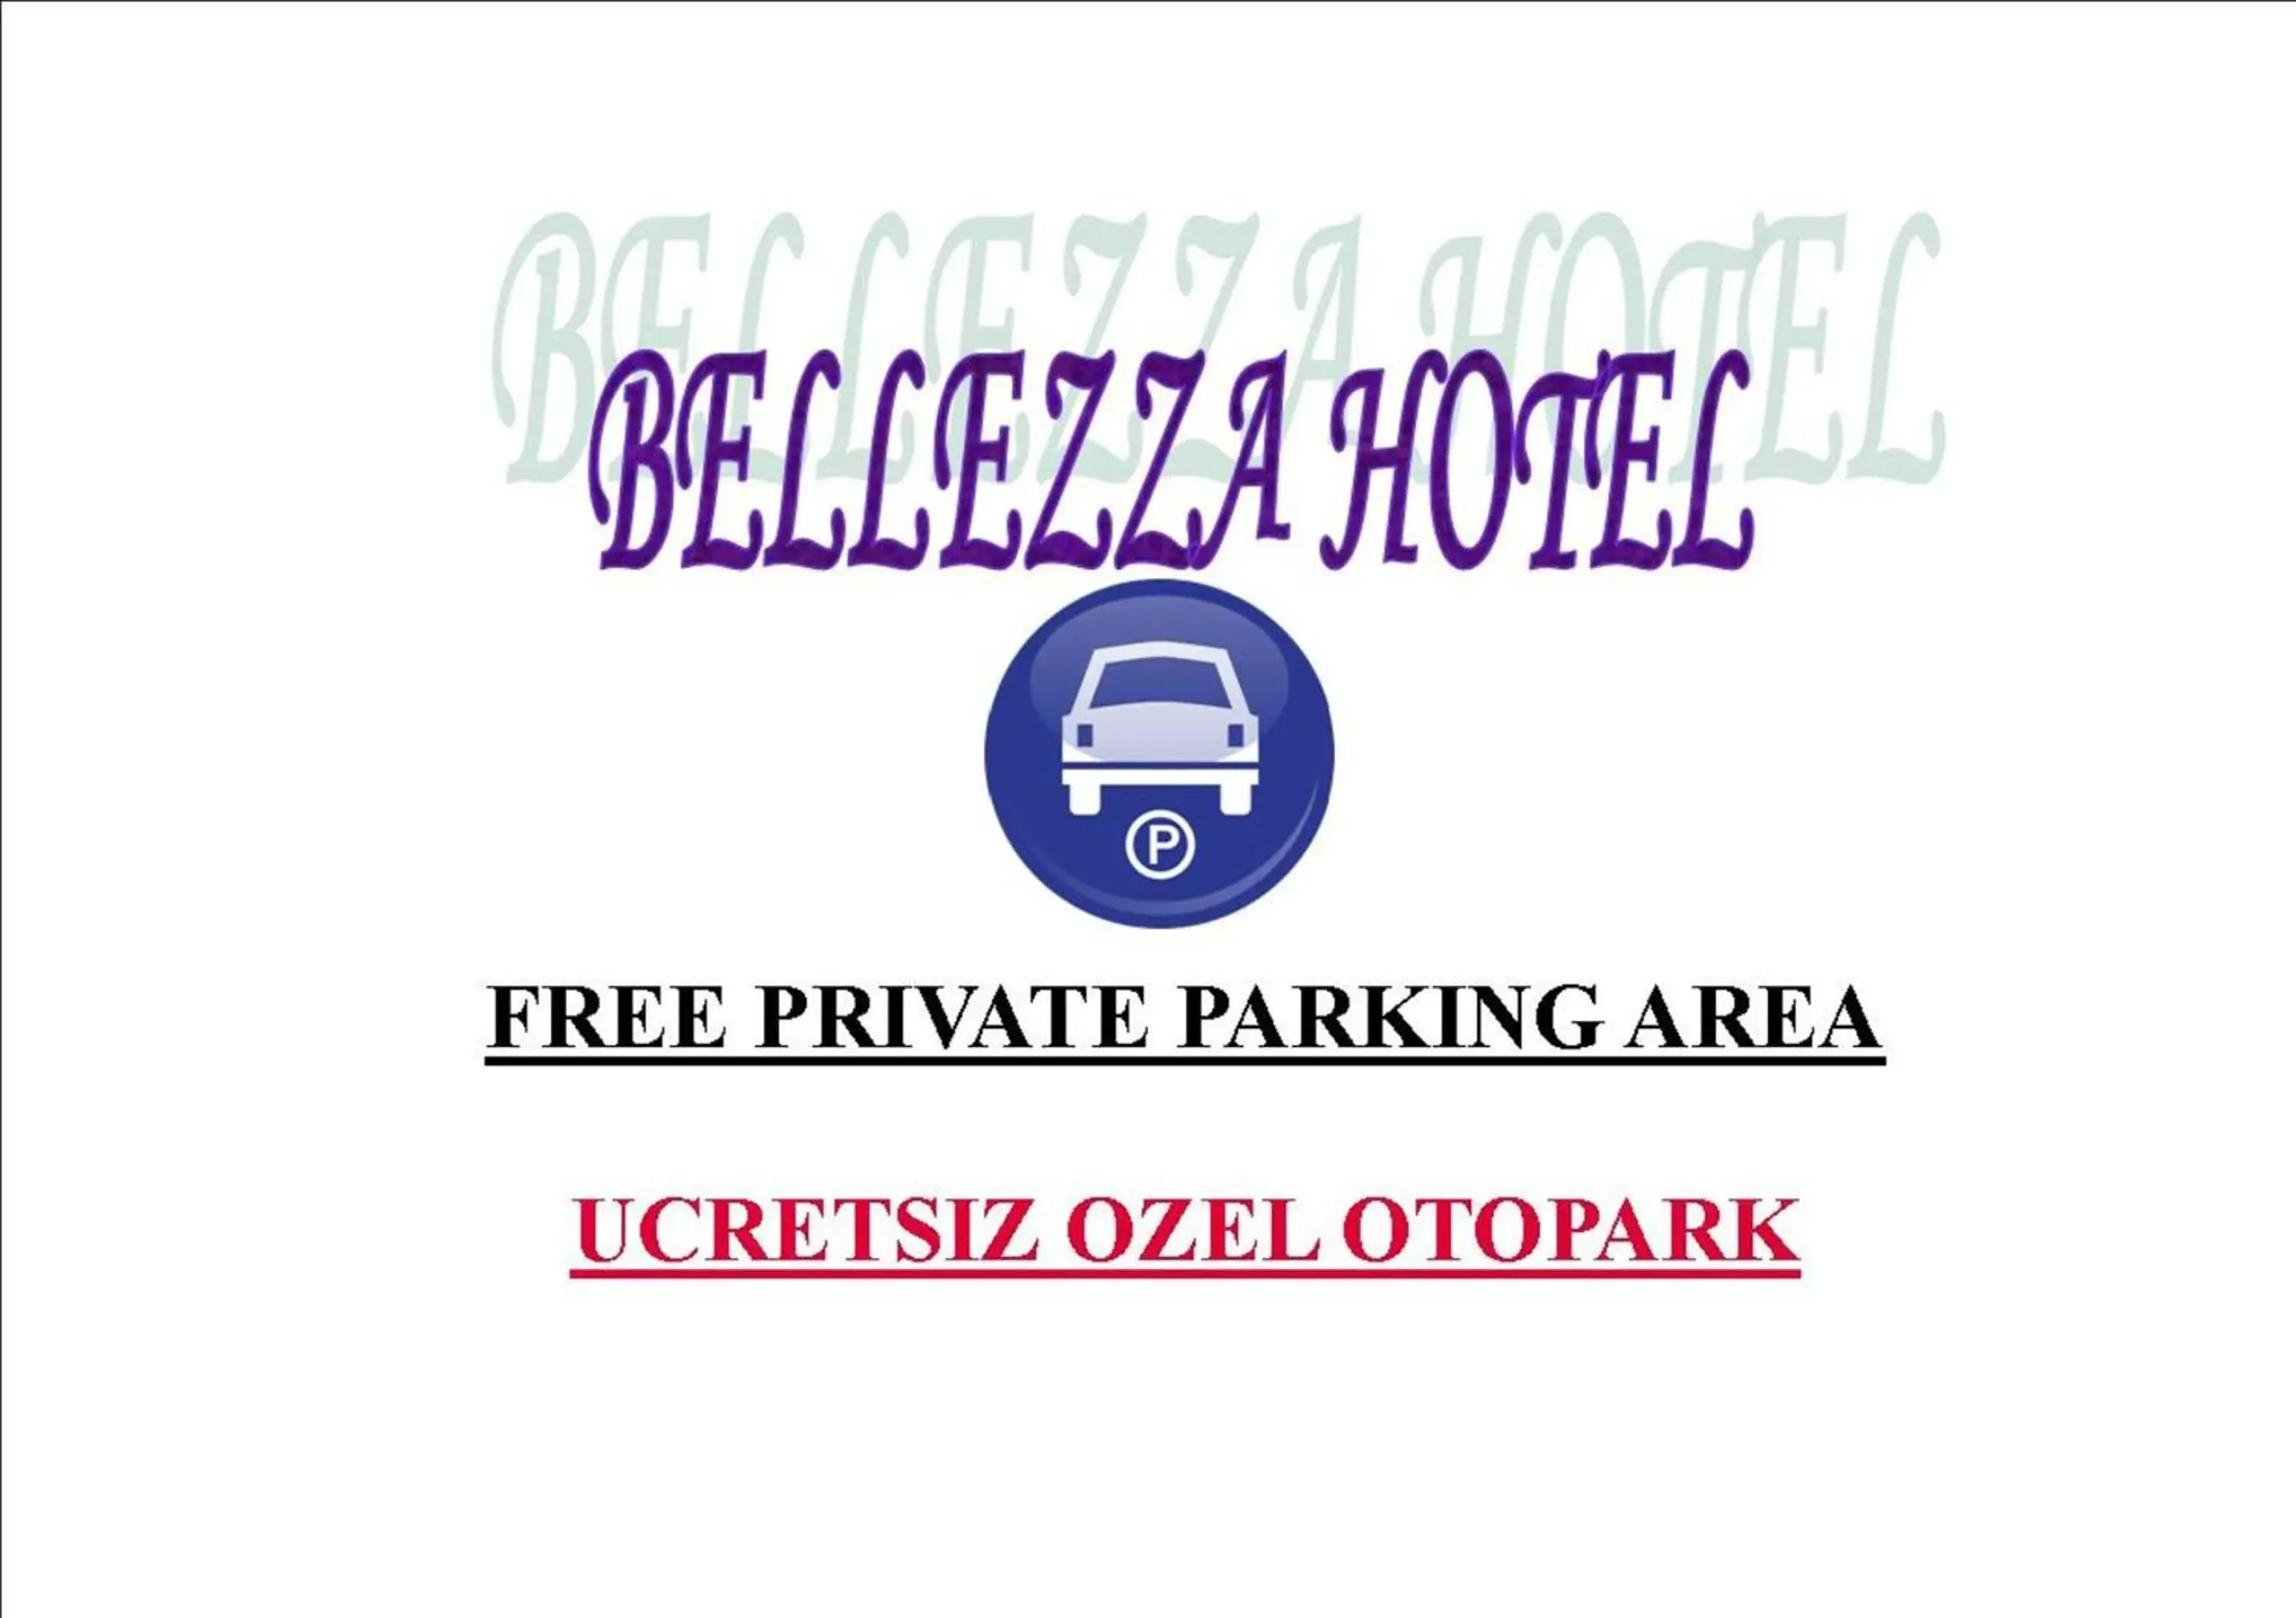 Text overlay in Bellezza Hotel Ortakoy